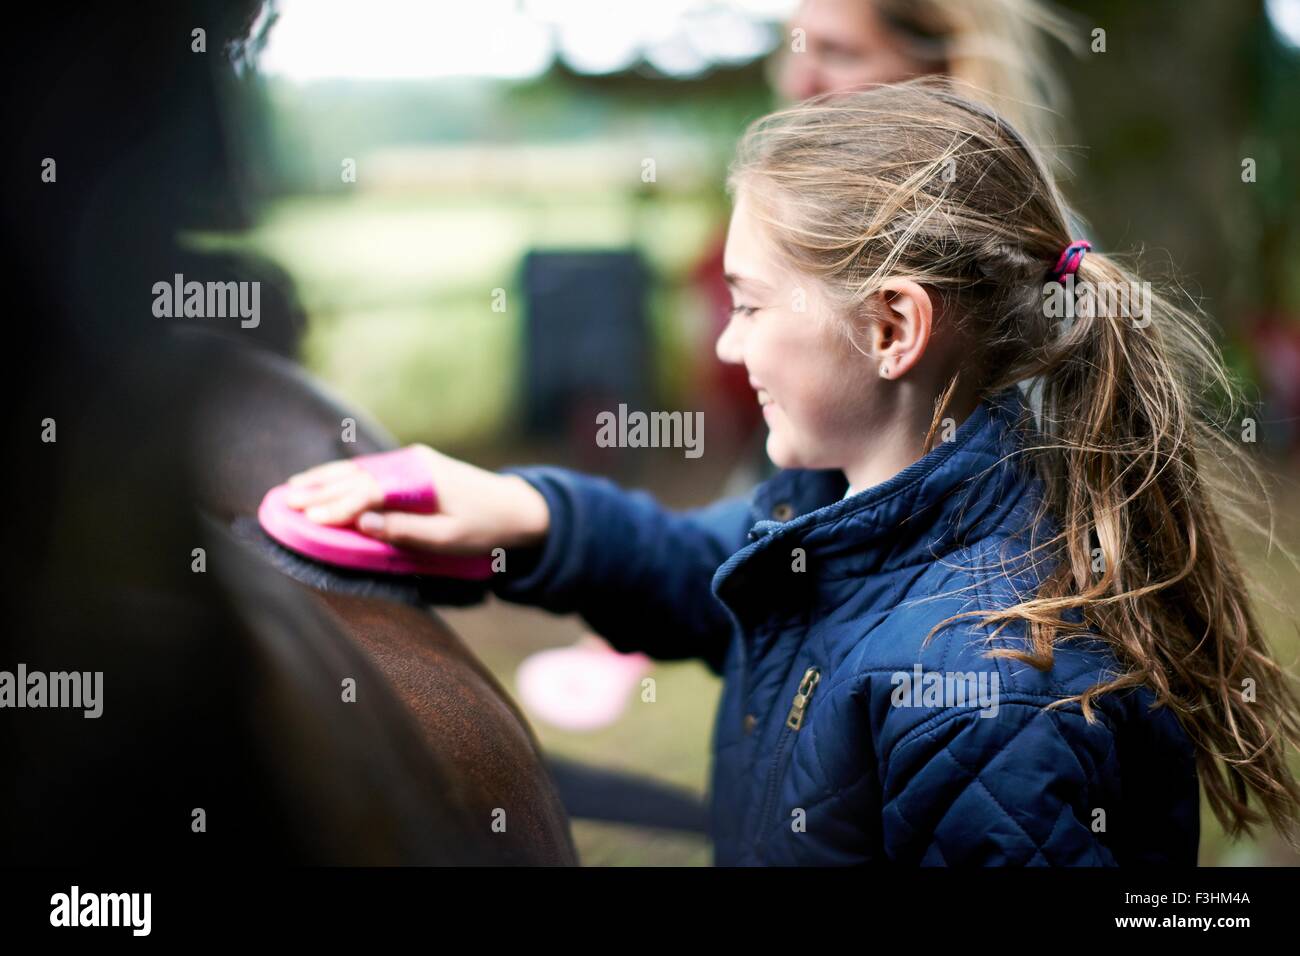 Girl horseback rider grooming horse Stock Photo